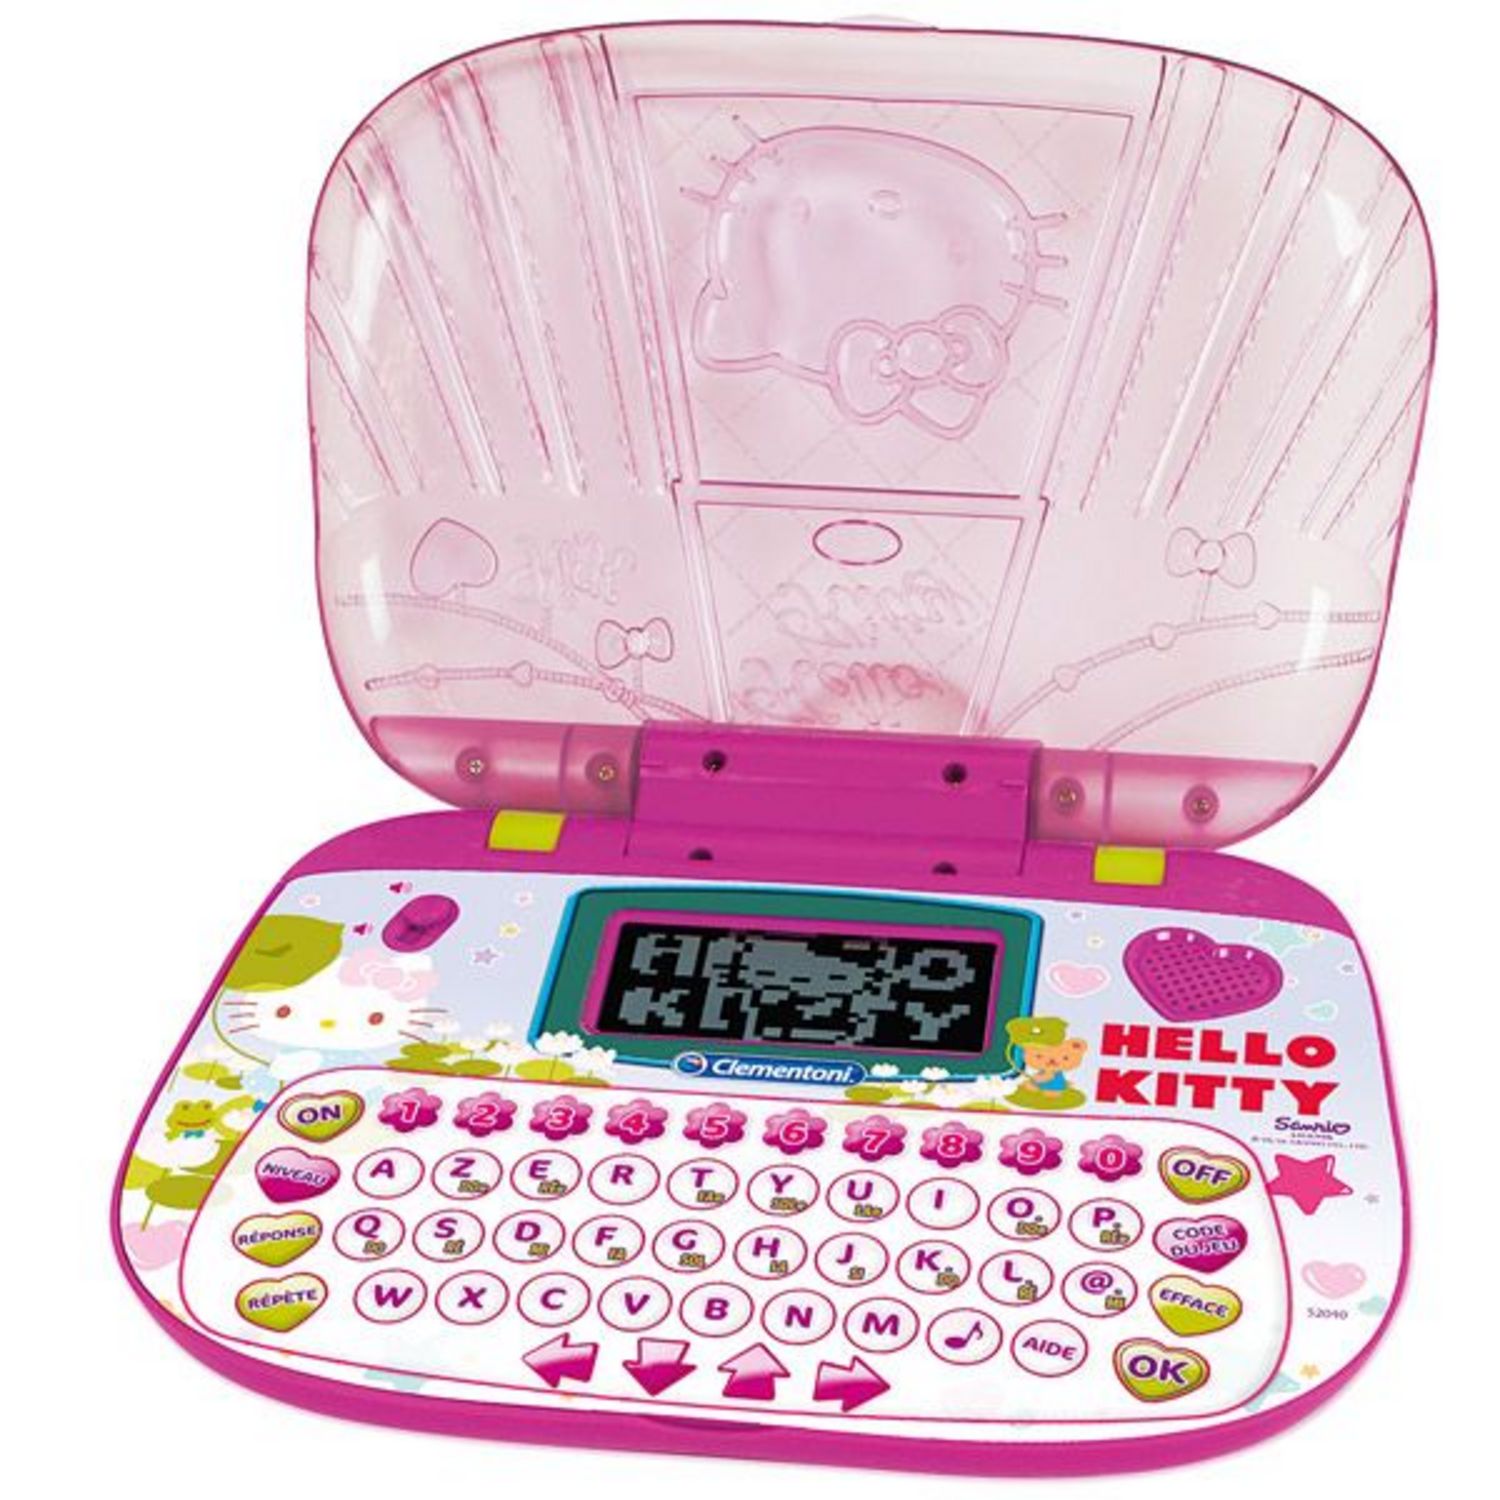 CLEMENTONI Ordinateur portable Hello Kitty pas cher 